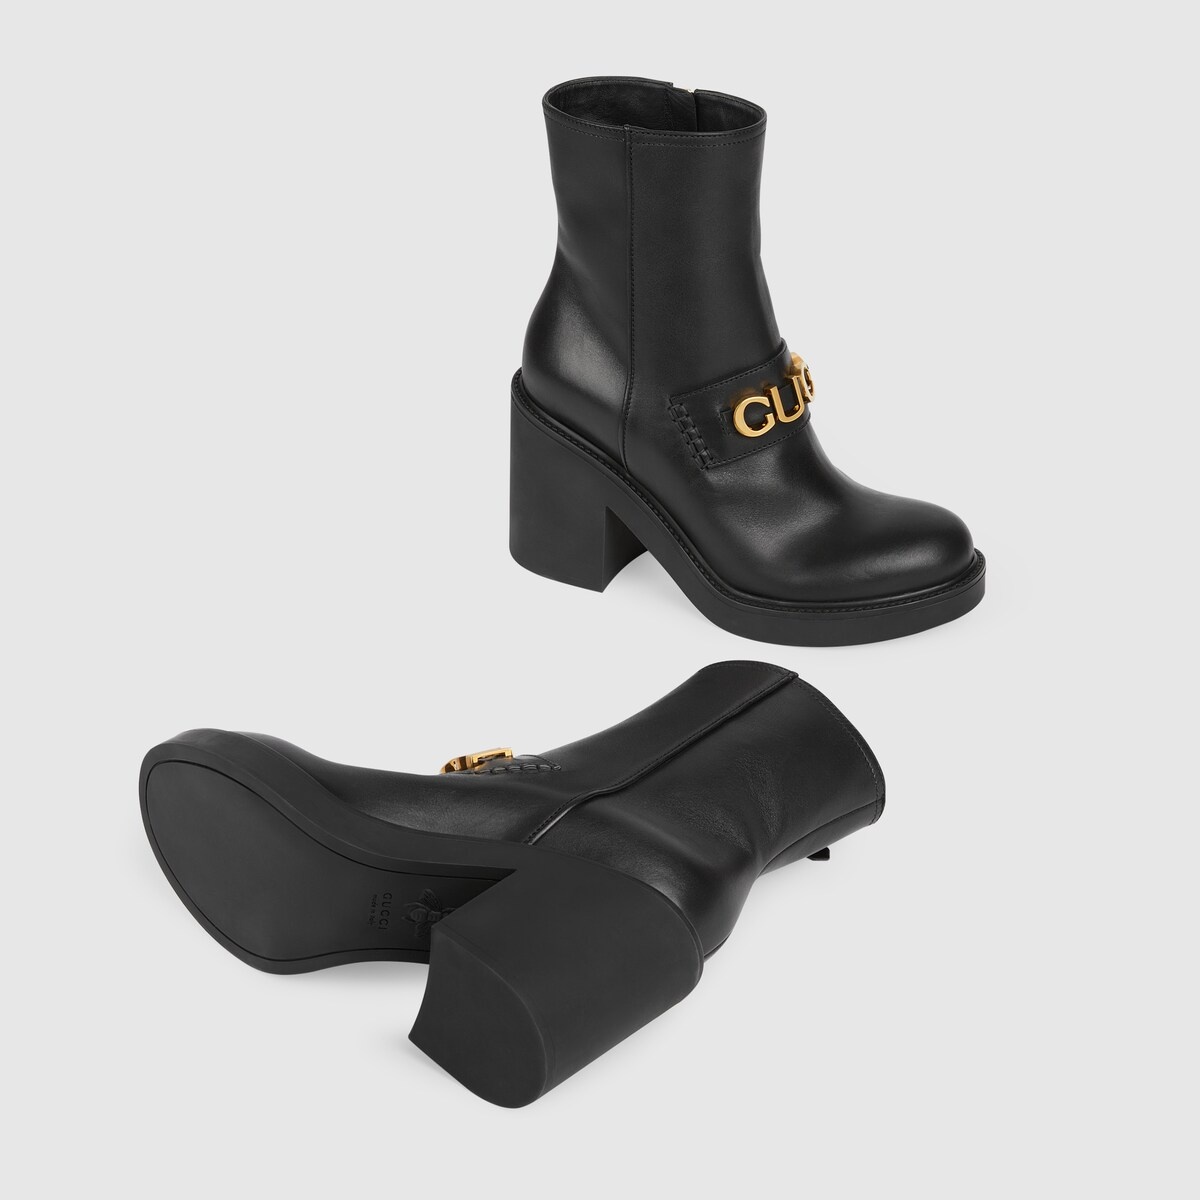 Women's Gucci boot - 7